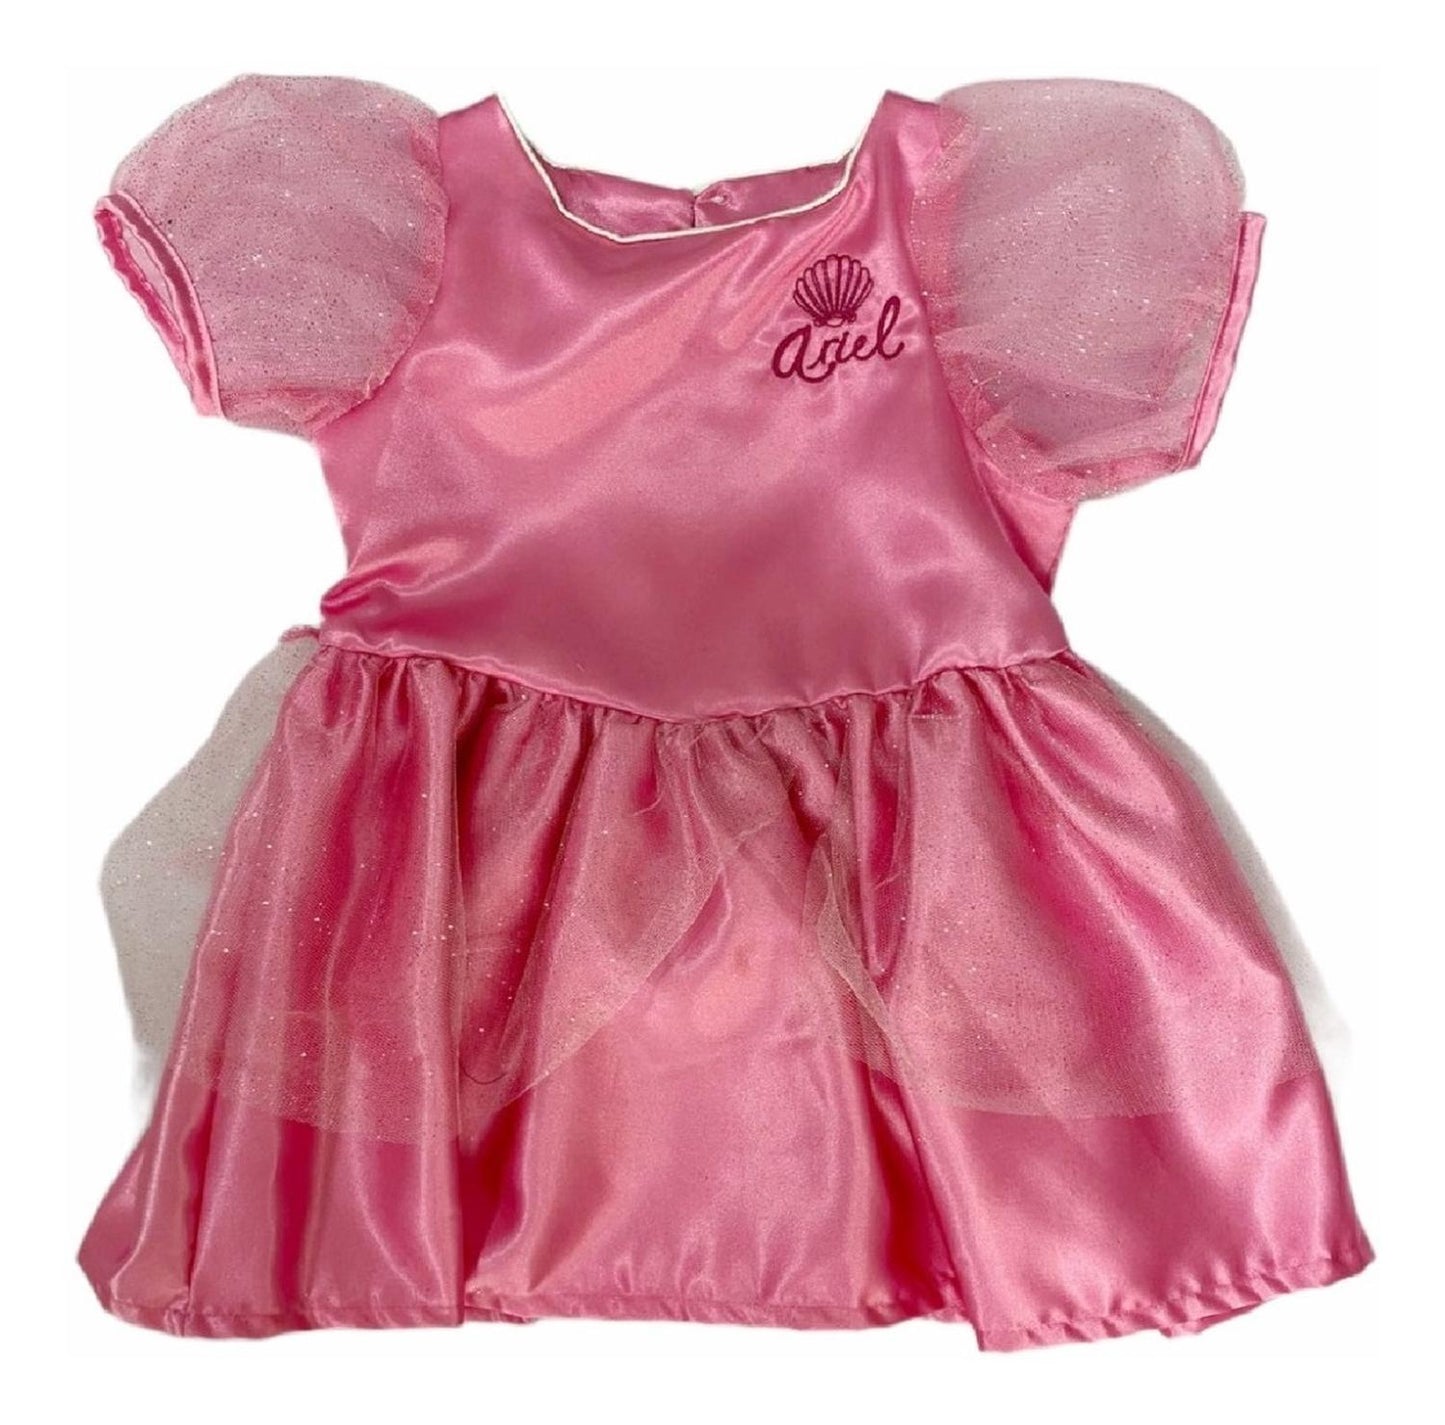 Kit 3 Vestidos Disney para Niña Estampados Princesa Bella, Sirenita, Ariel